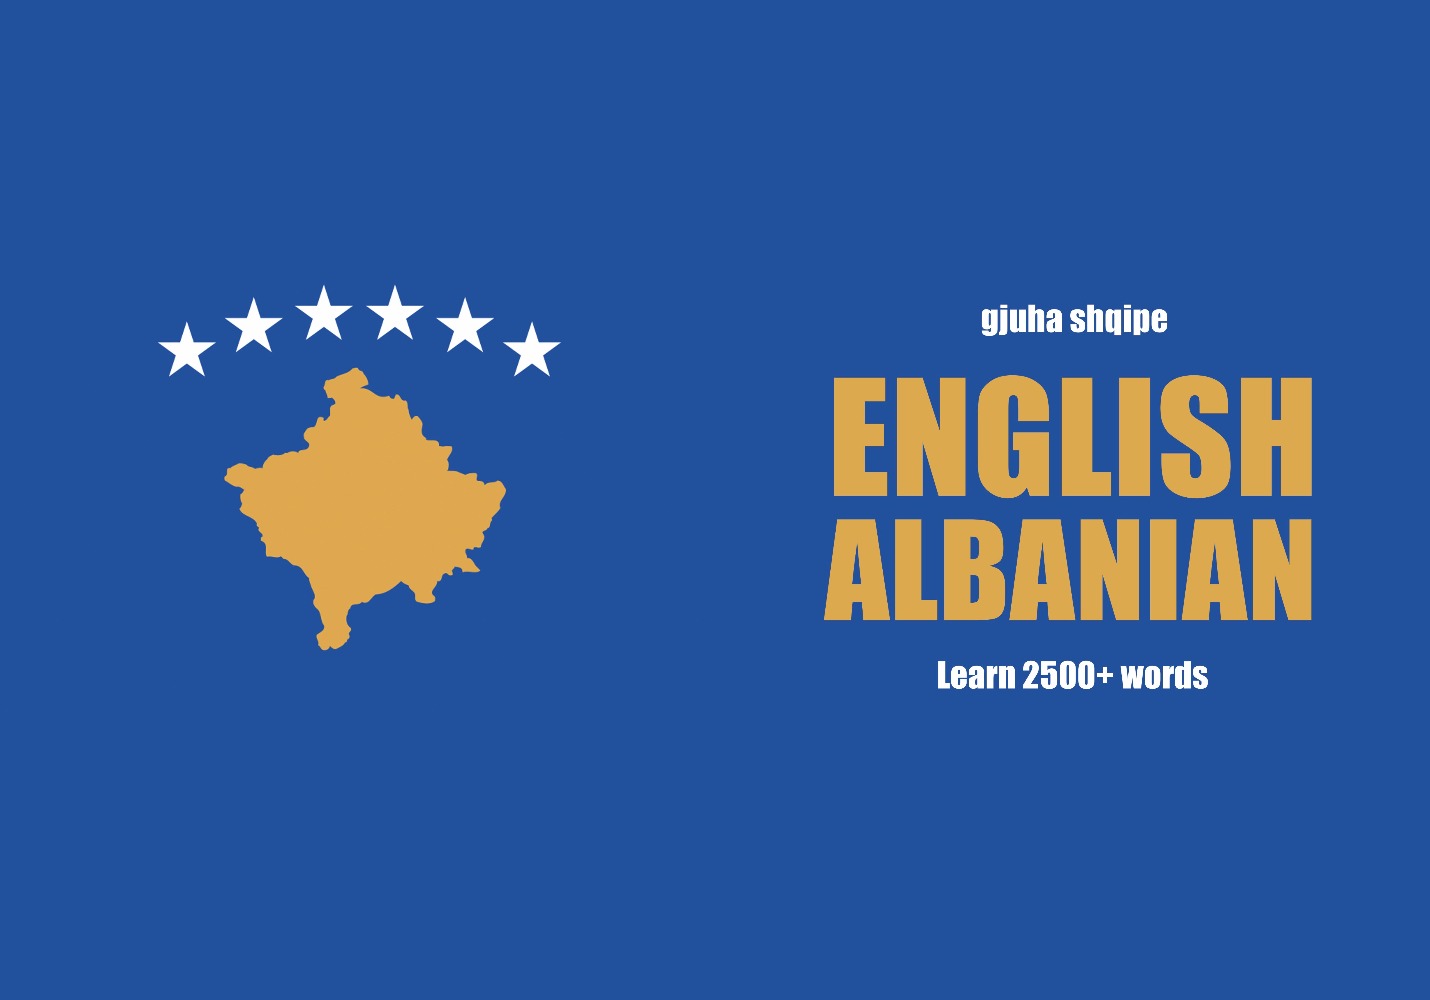 Kosovan Albanian language notebook cover